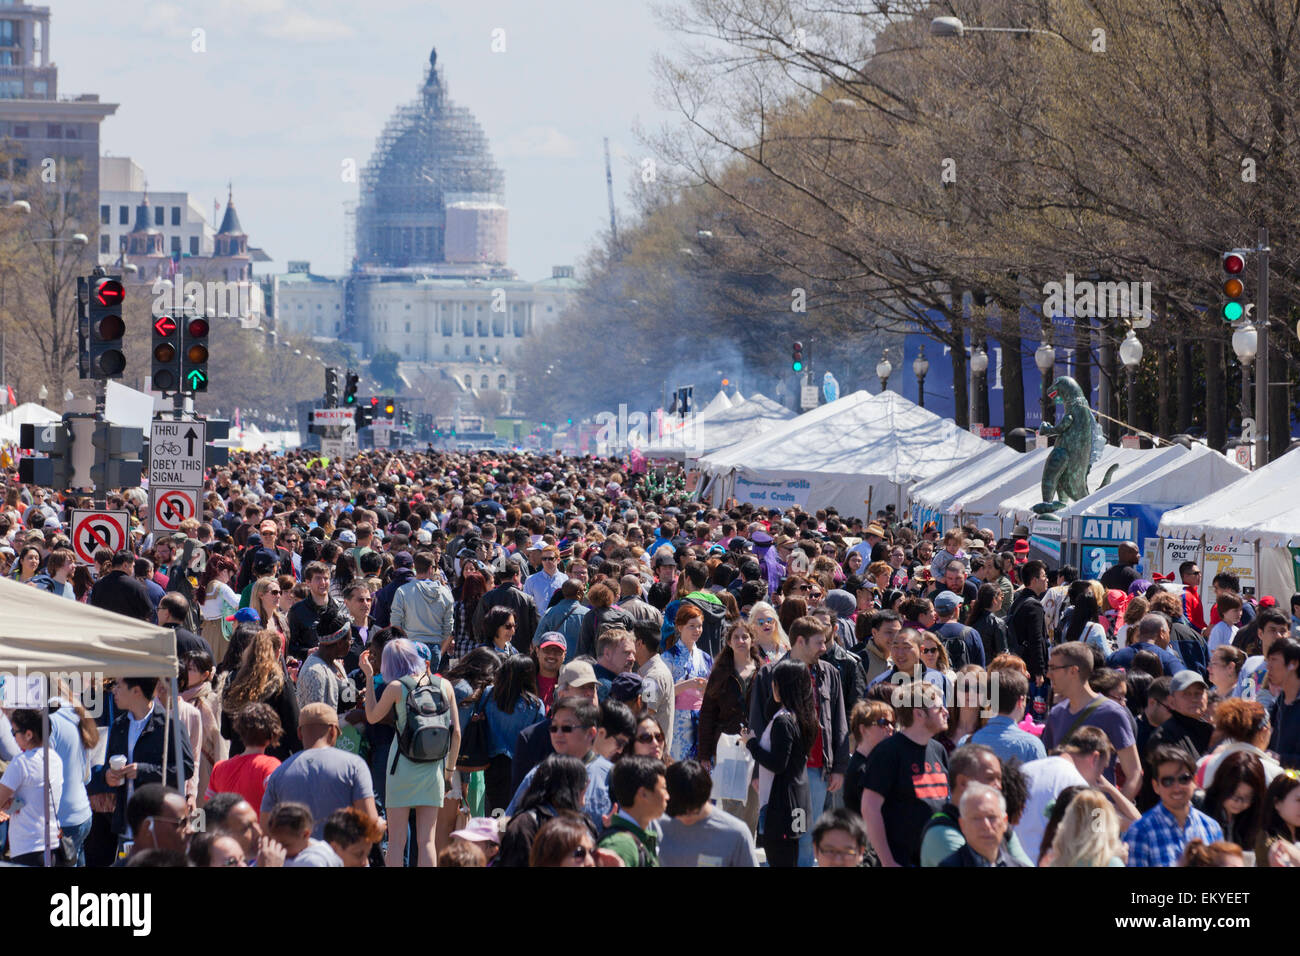 Crowd at National Cherry Blossom Festival (Sakura Matsuri) - Washington, DC USA Stock Photo